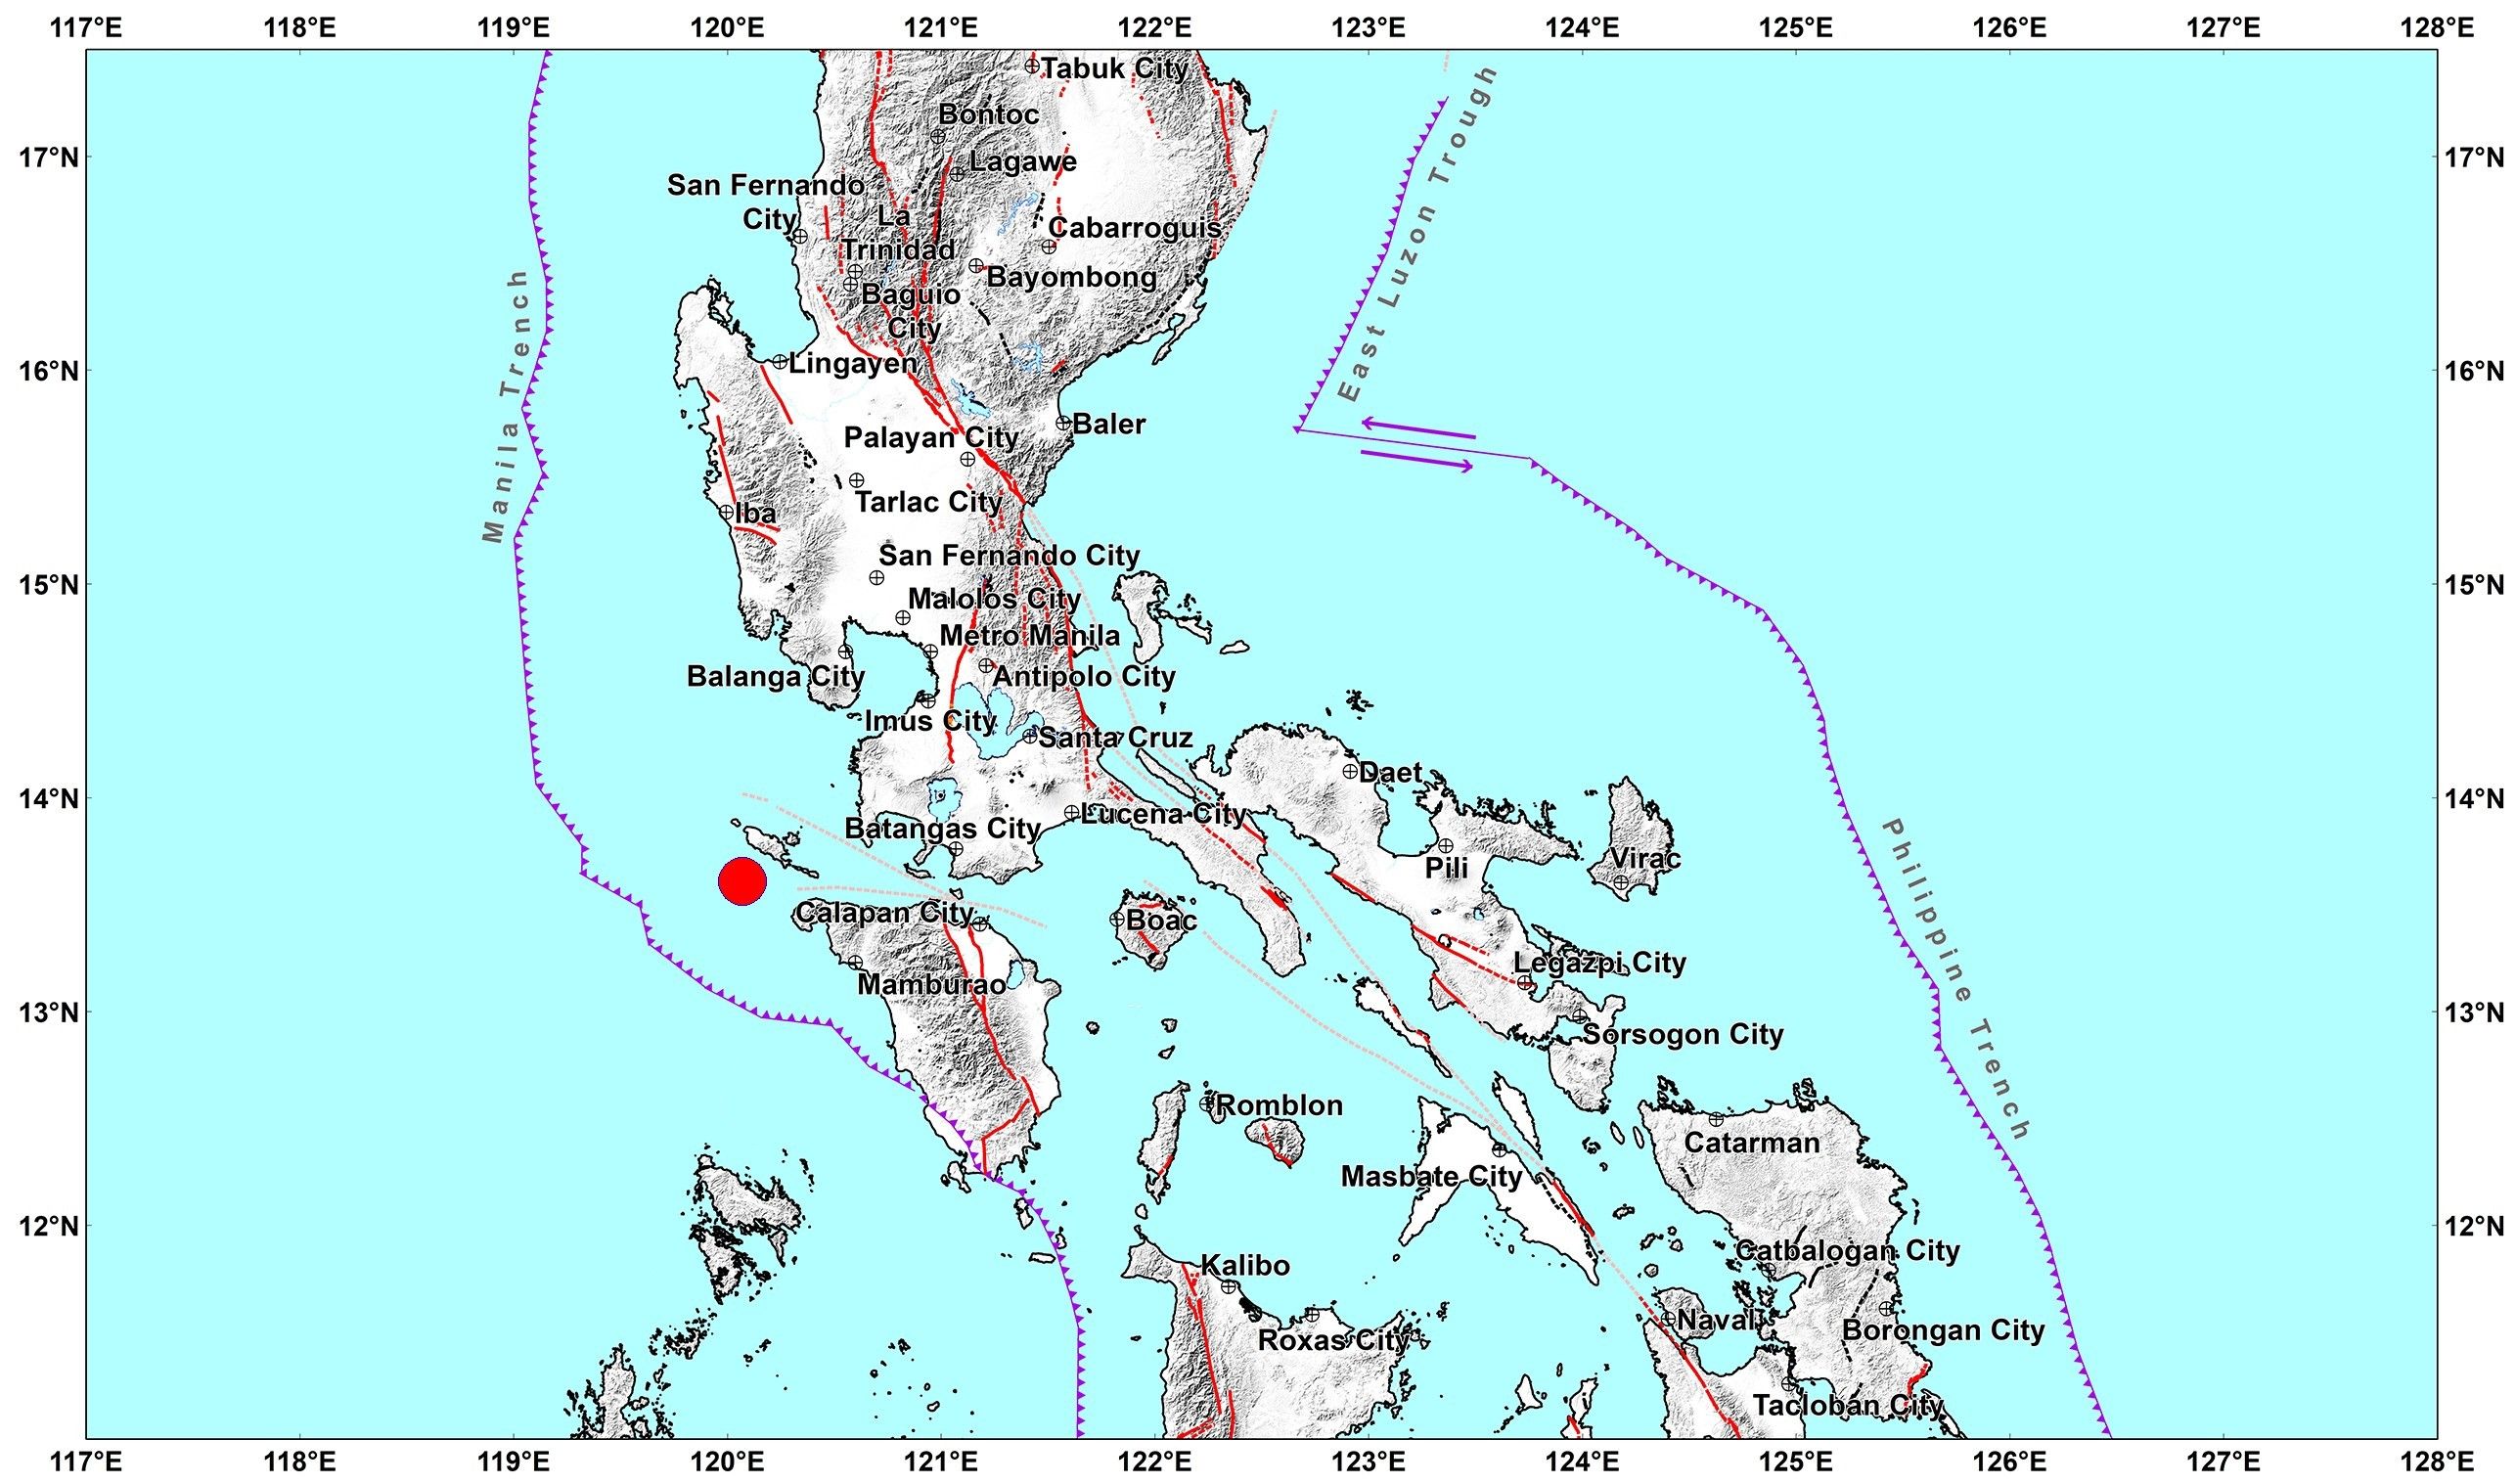 Magnitude-5.4 quake jolts parts of Luzon